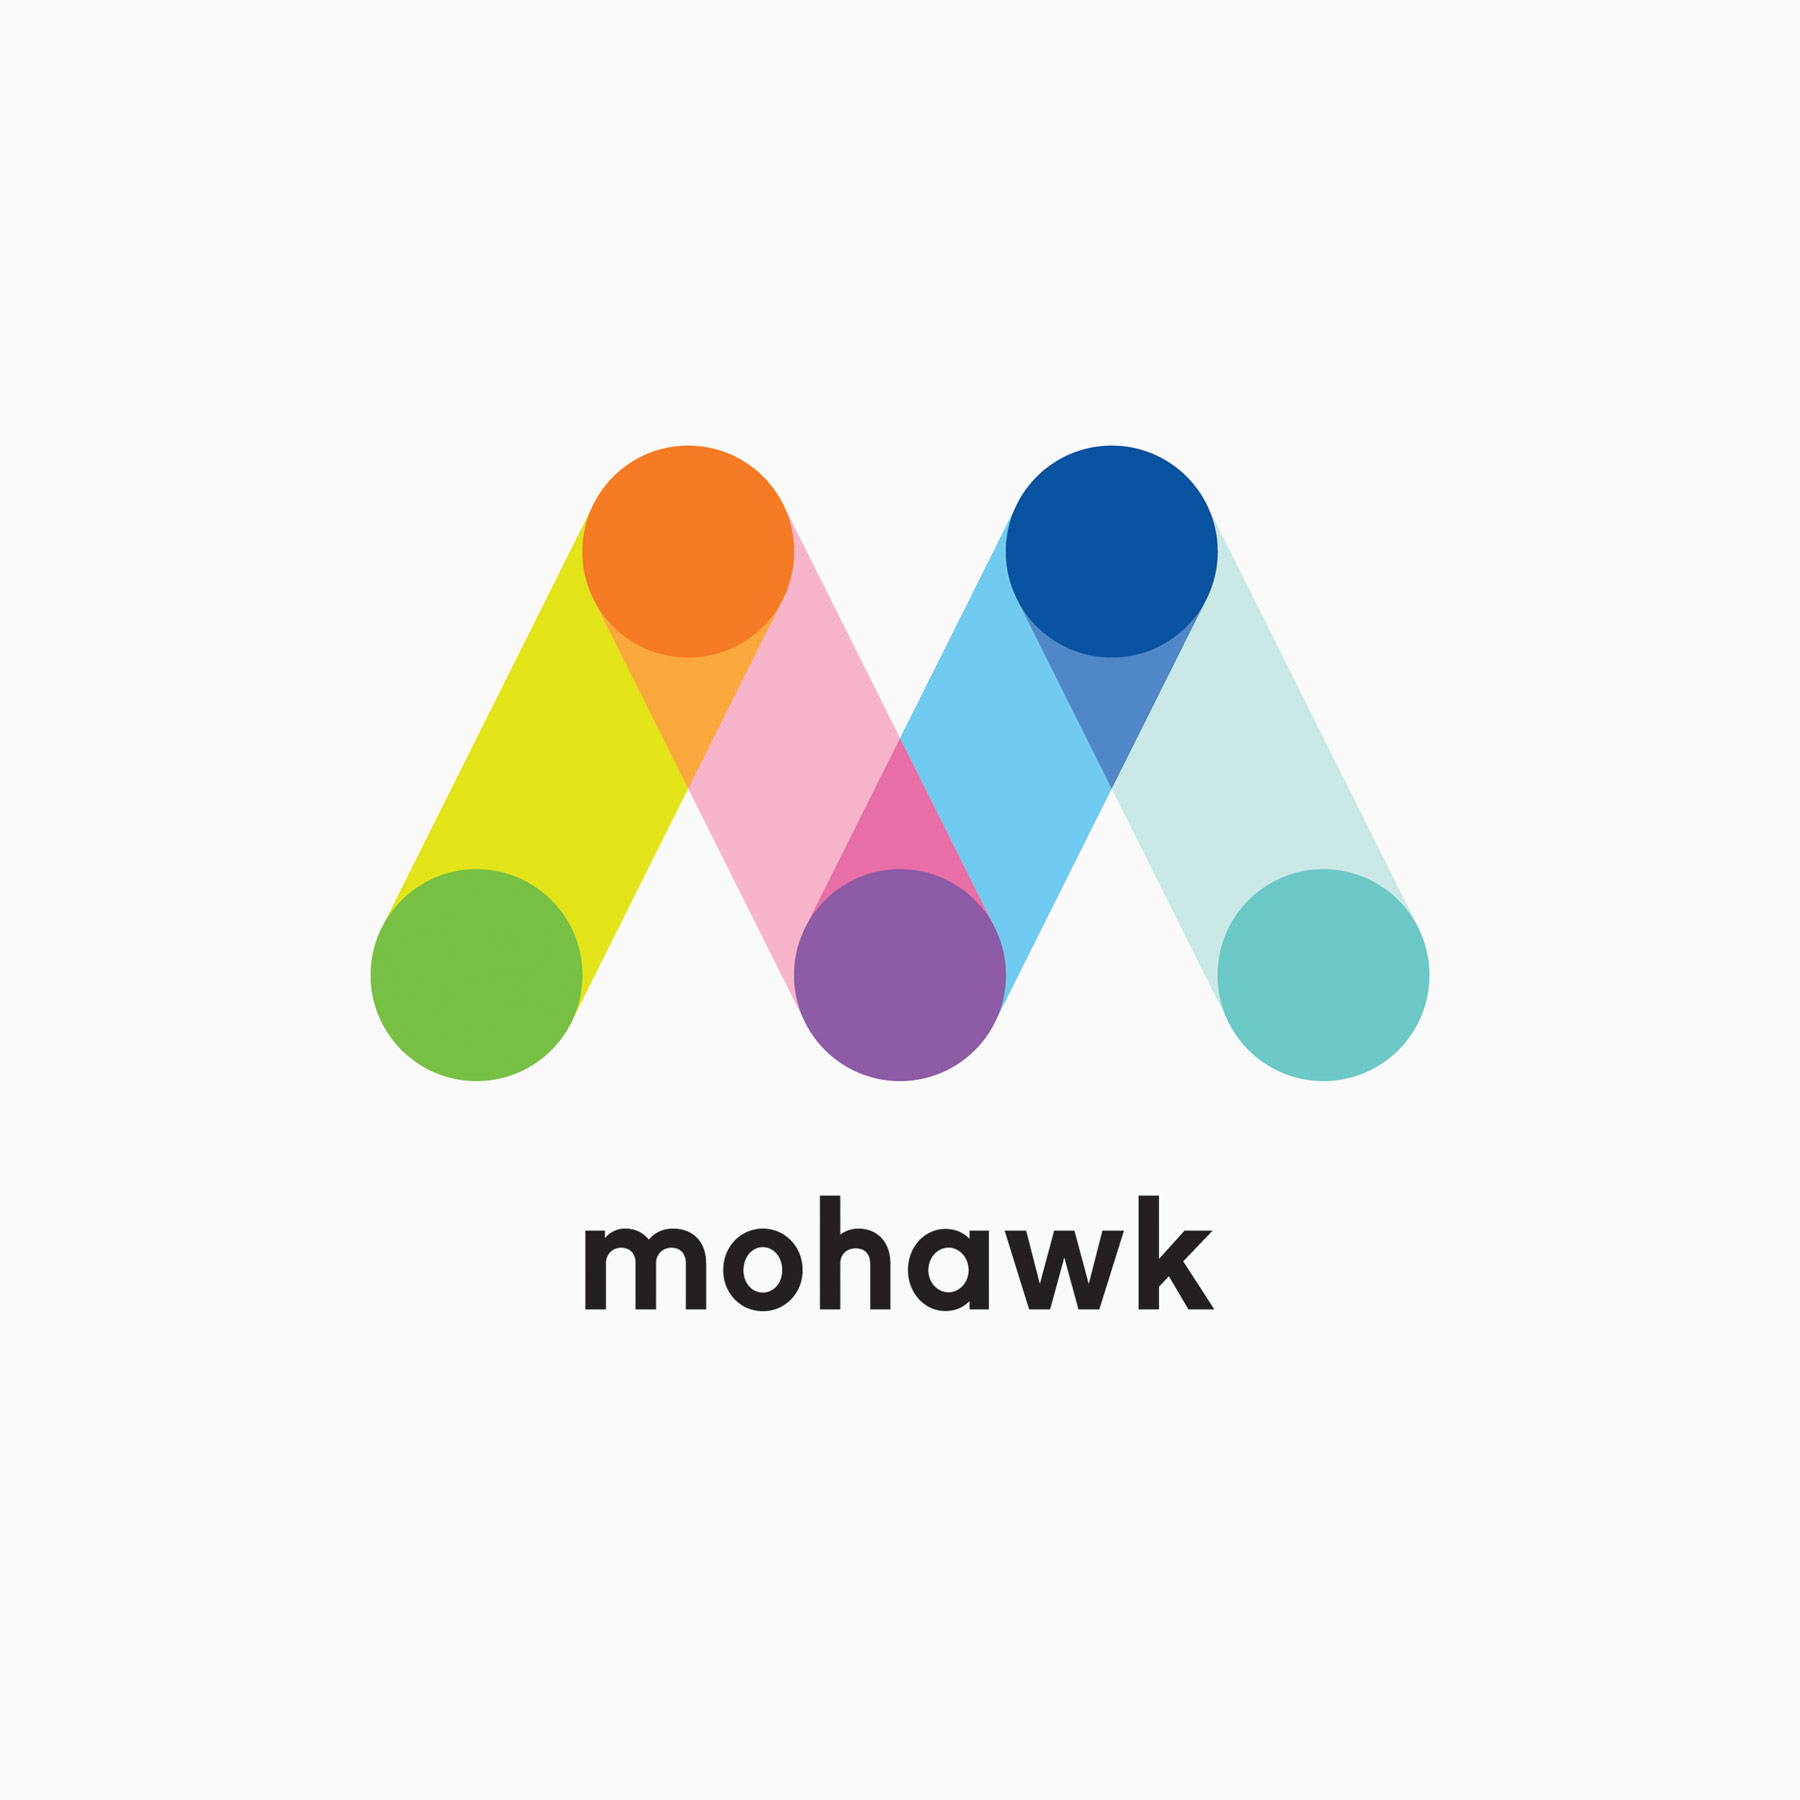 Mohawk Fine Papers logo